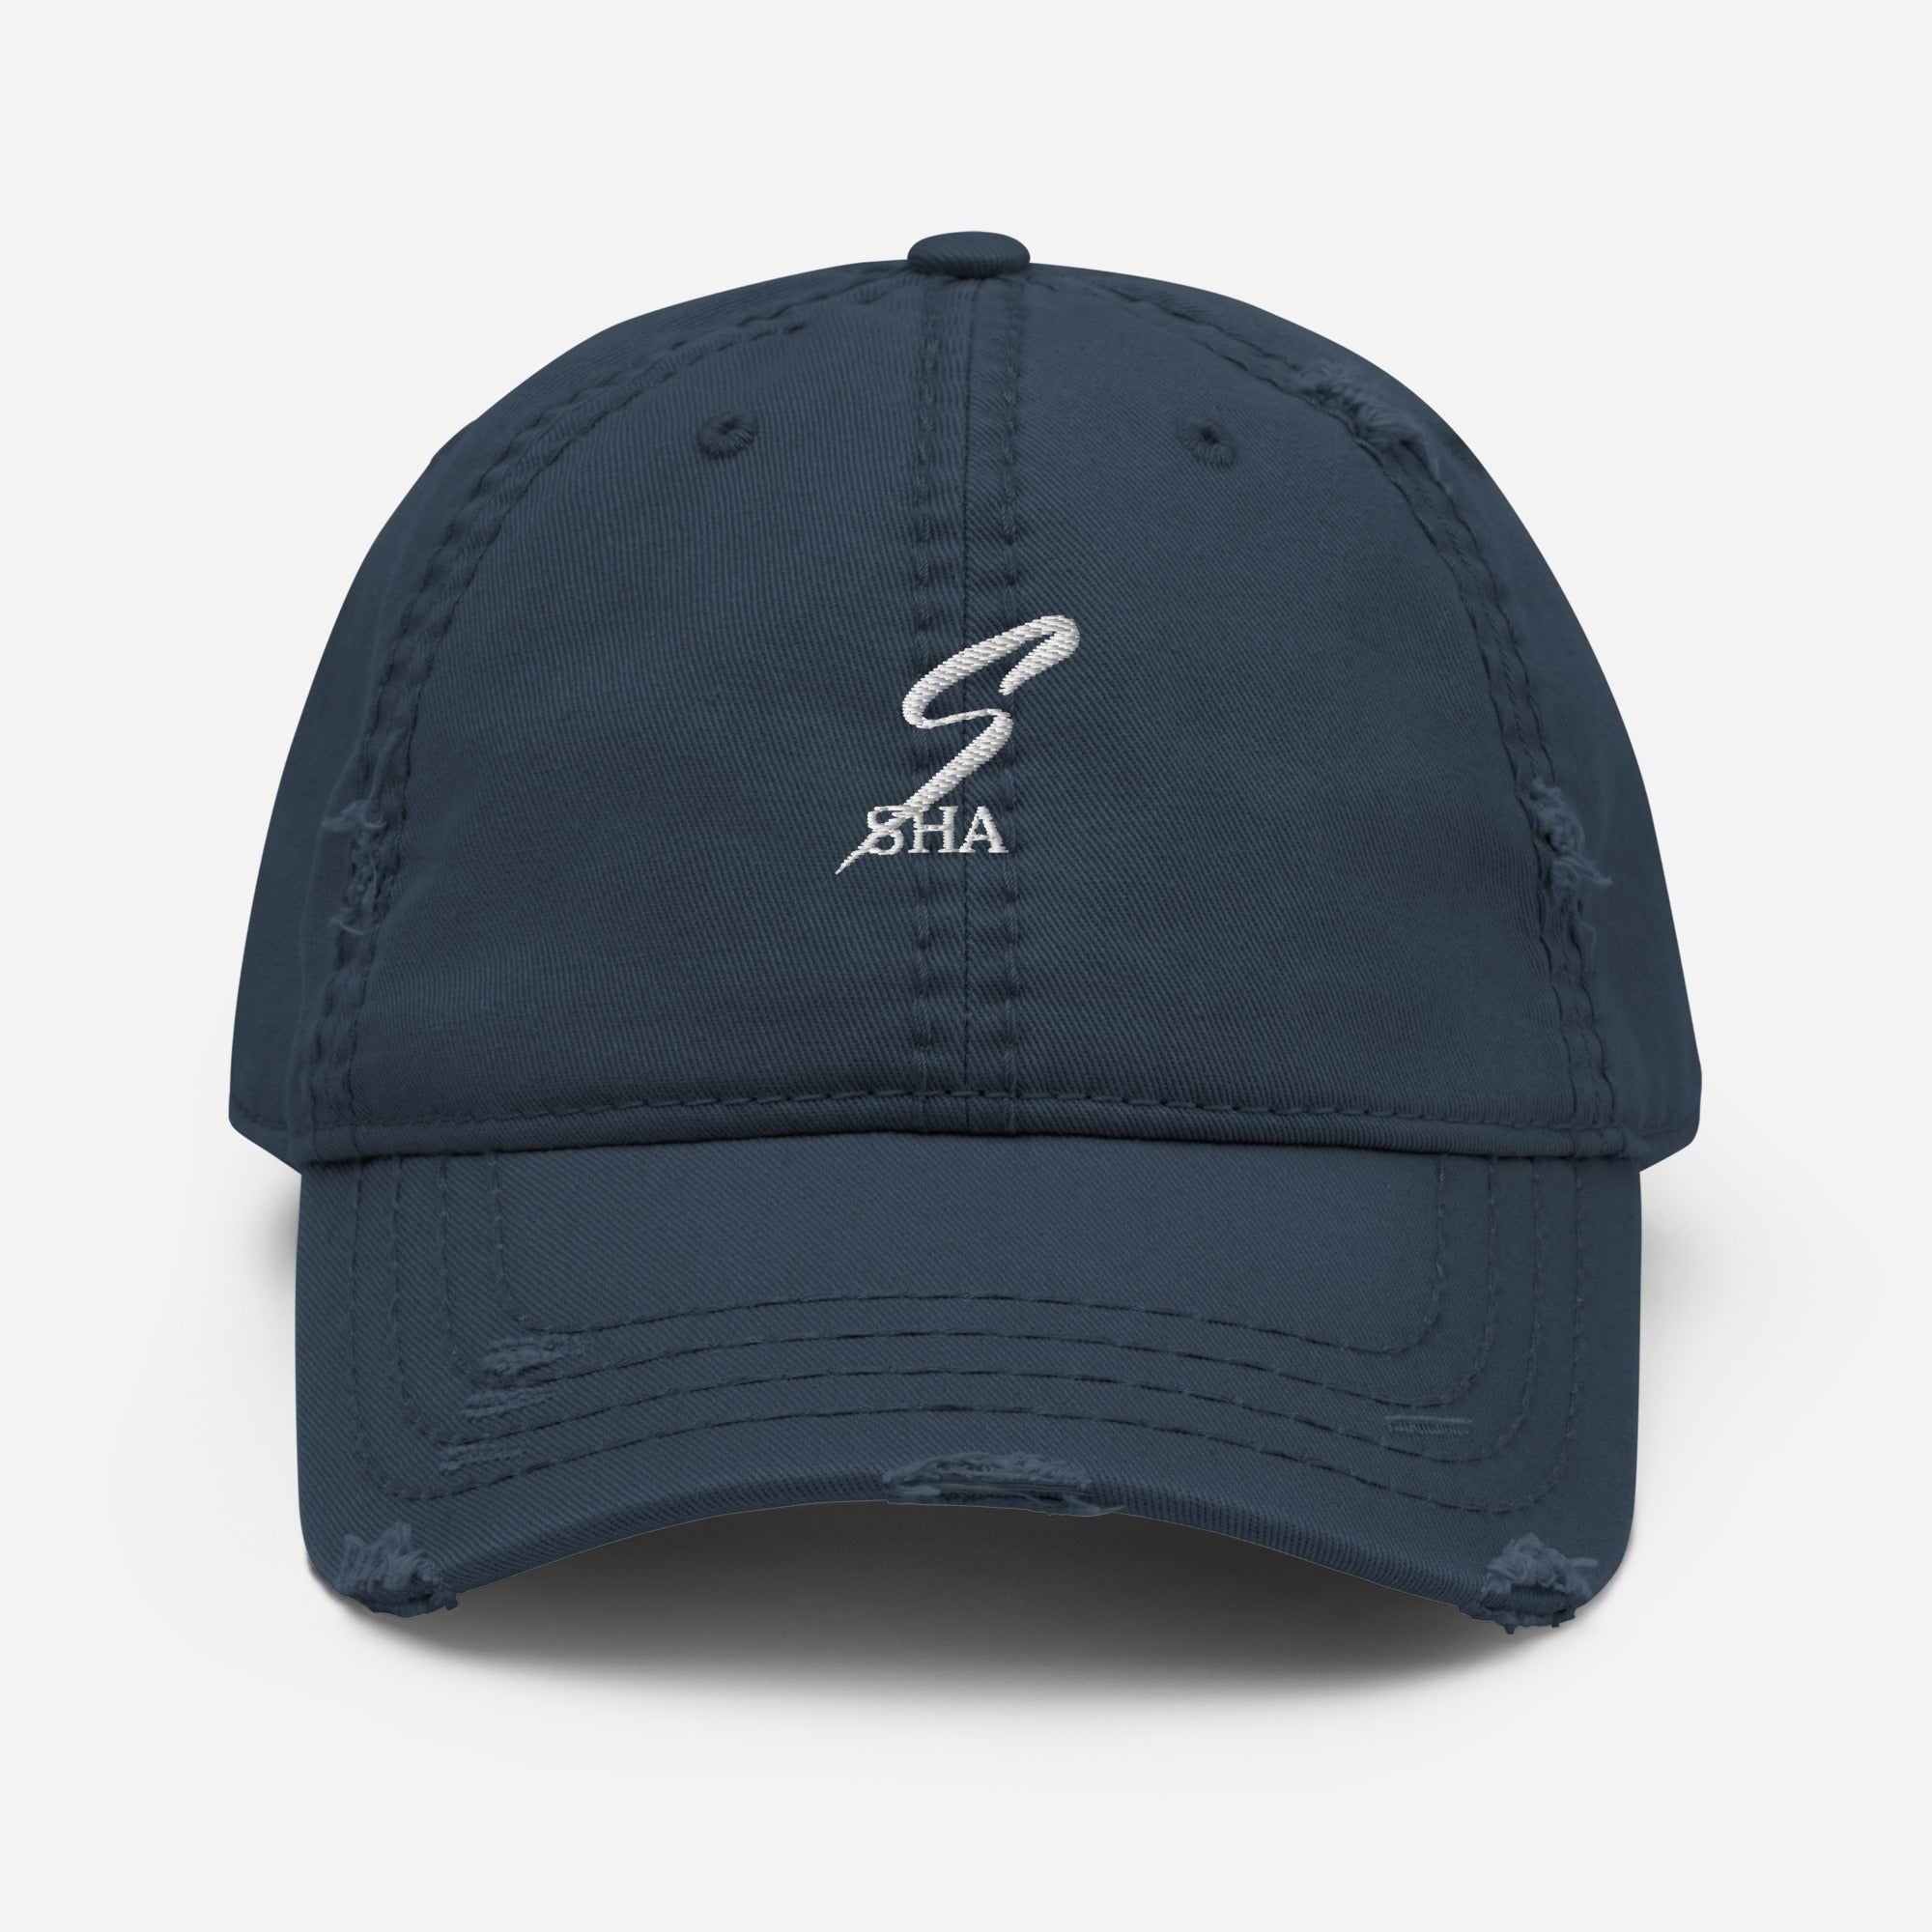 sha infinity-Distressed Dad Hat